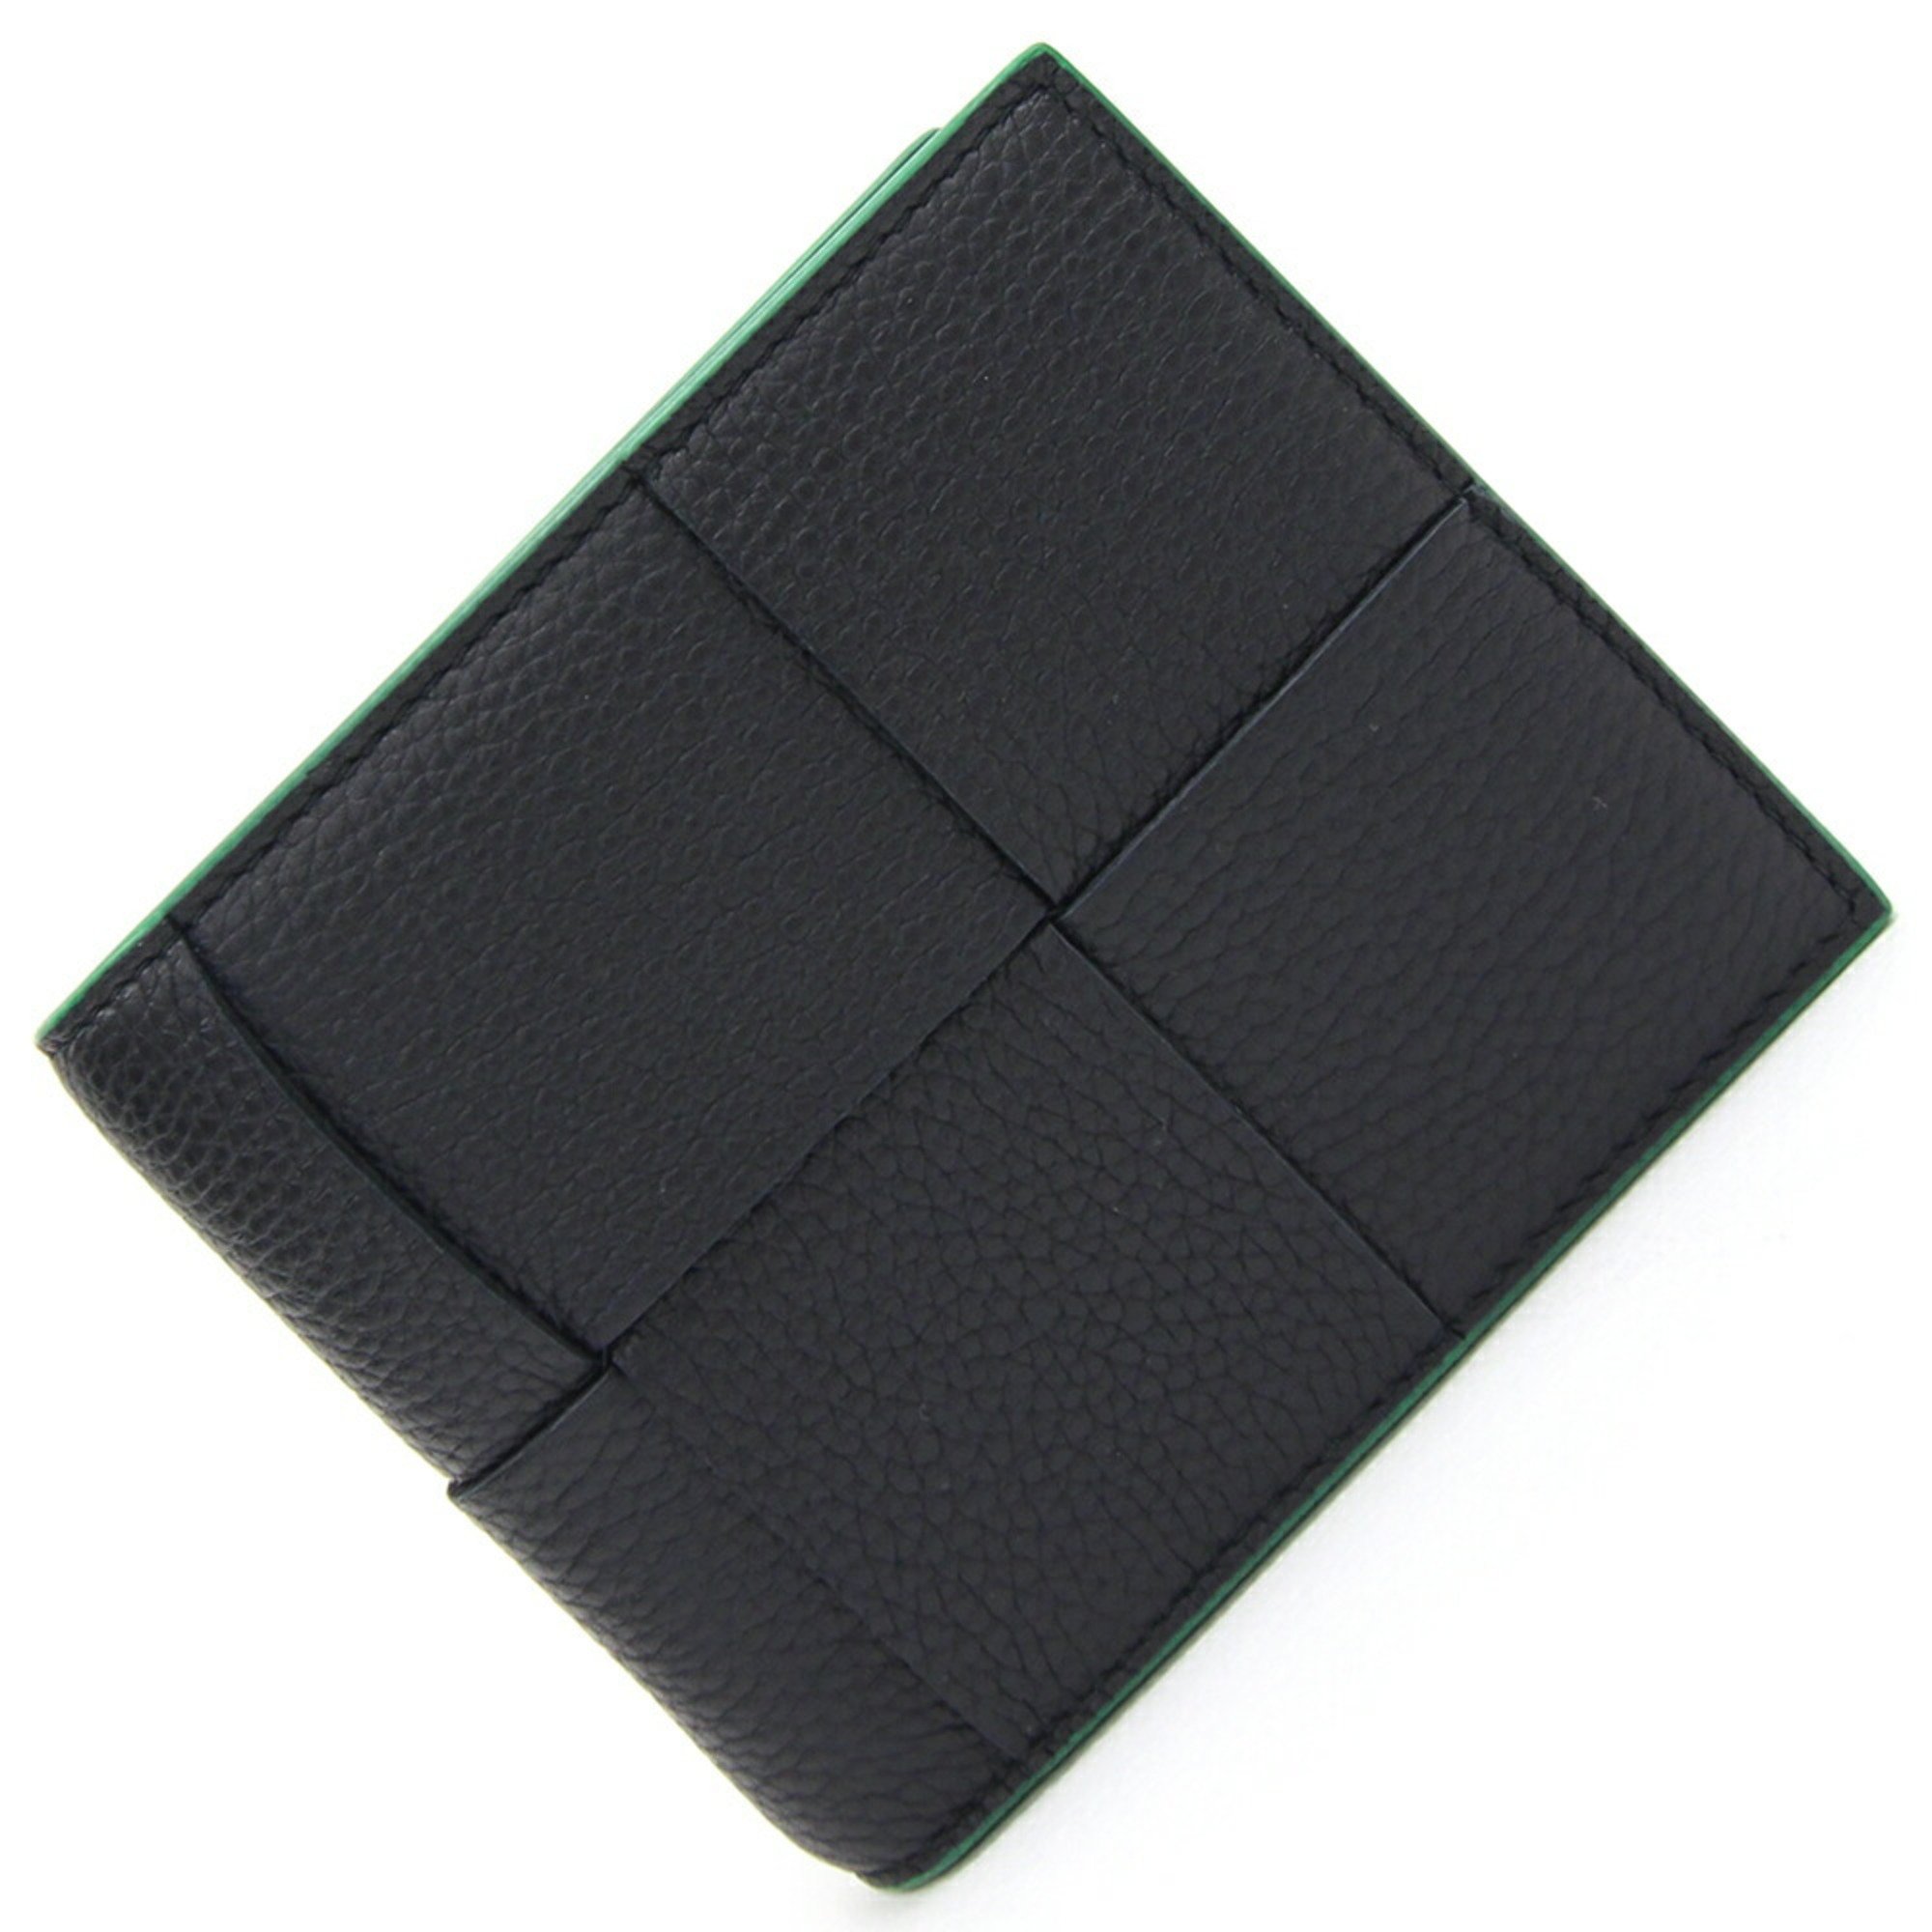 Bottega Veneta Black Leather Bifold Wallet